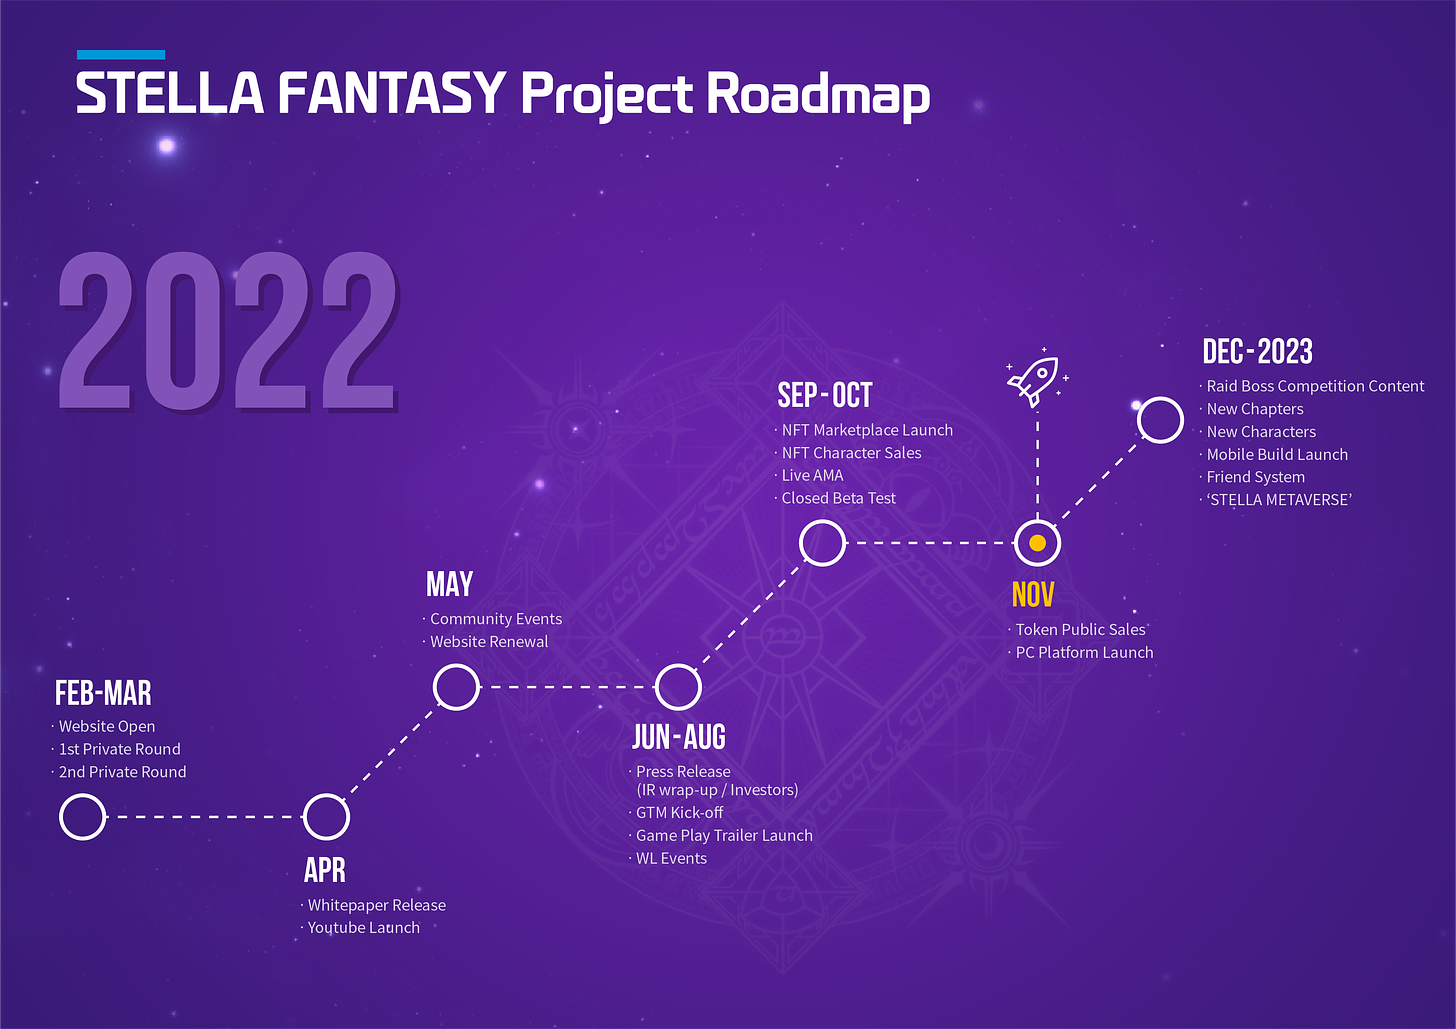 The one-year roadmap of Stella Fantasy